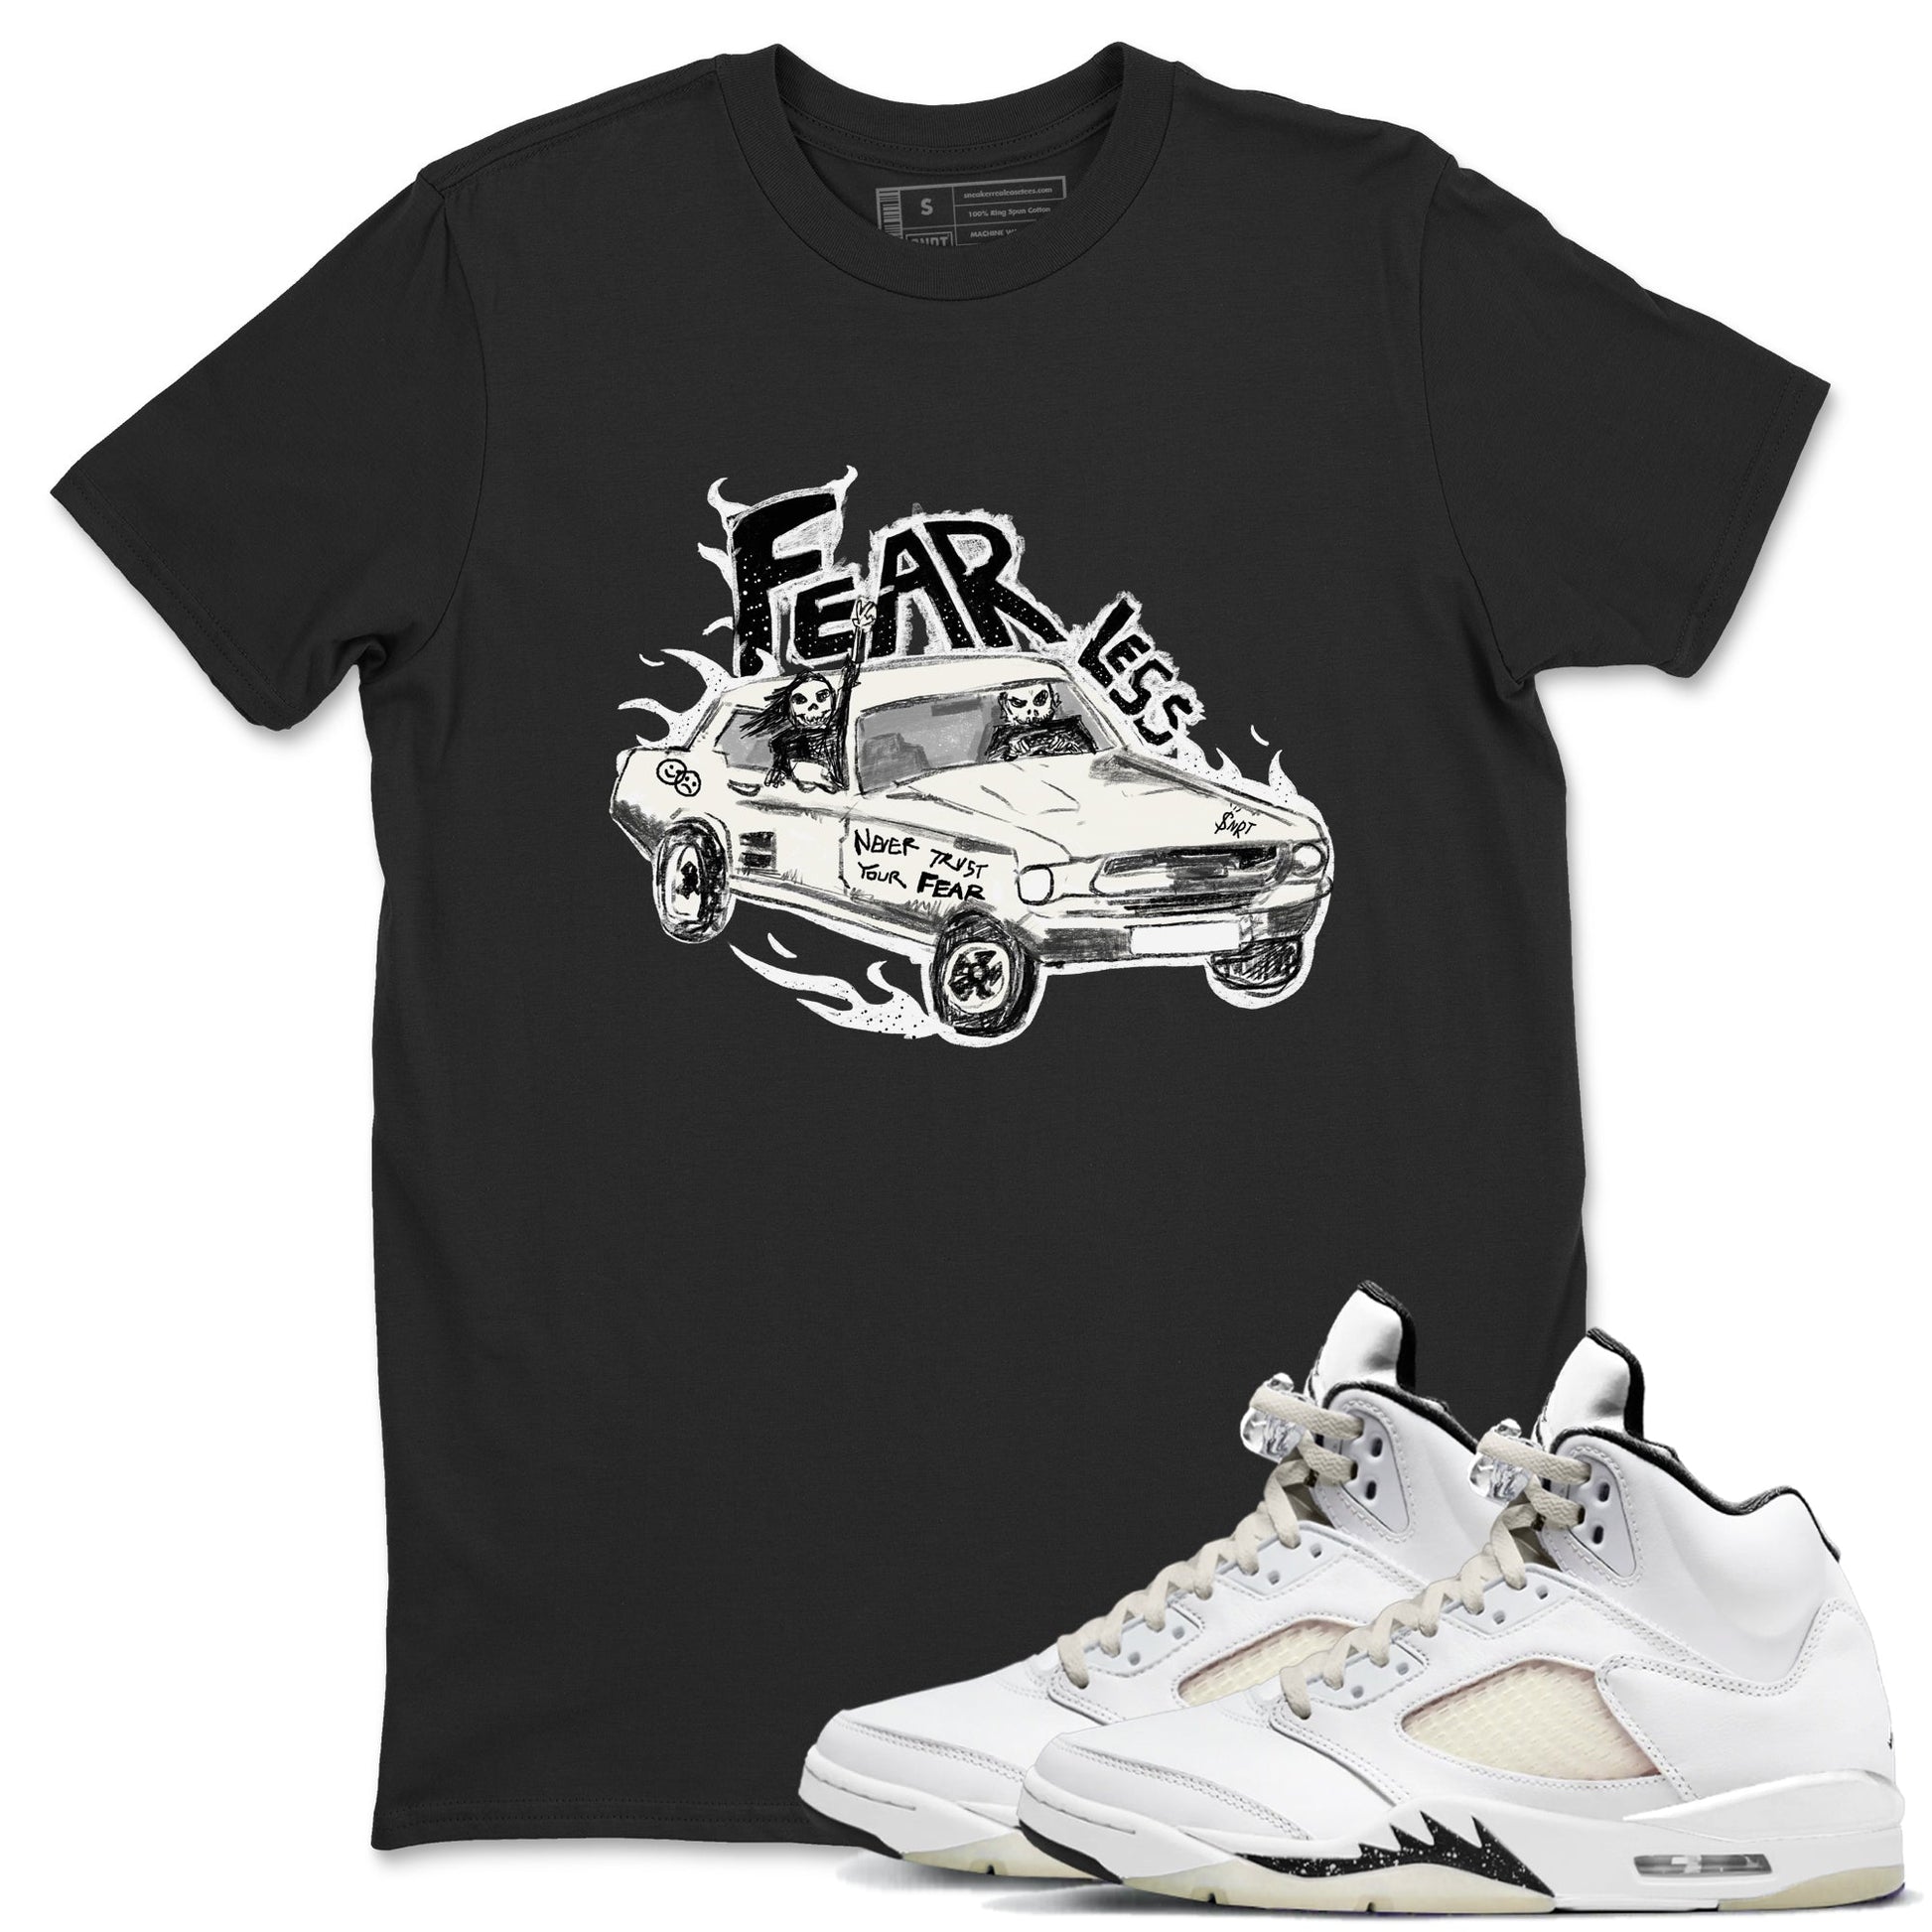 5s Sail shirt to match jordans Fearless Car sneaker tees Air Jordan 5 Sail SNRT Sneaker Release Tees unisex cotton Black 1 crew neck shirt